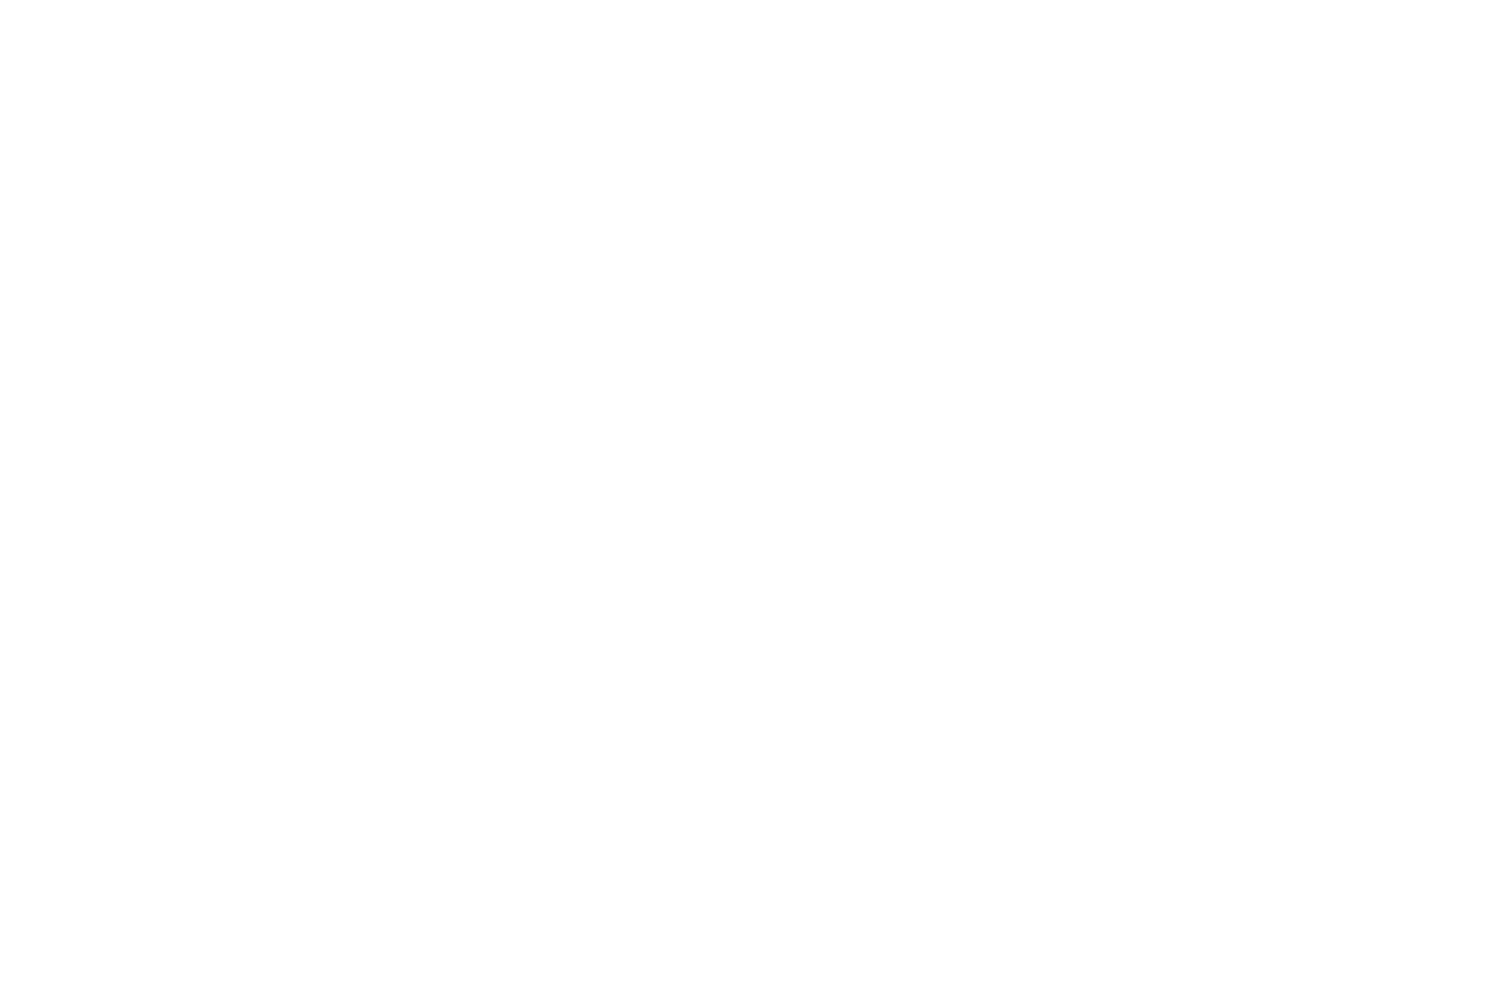 Arnold Design+Build